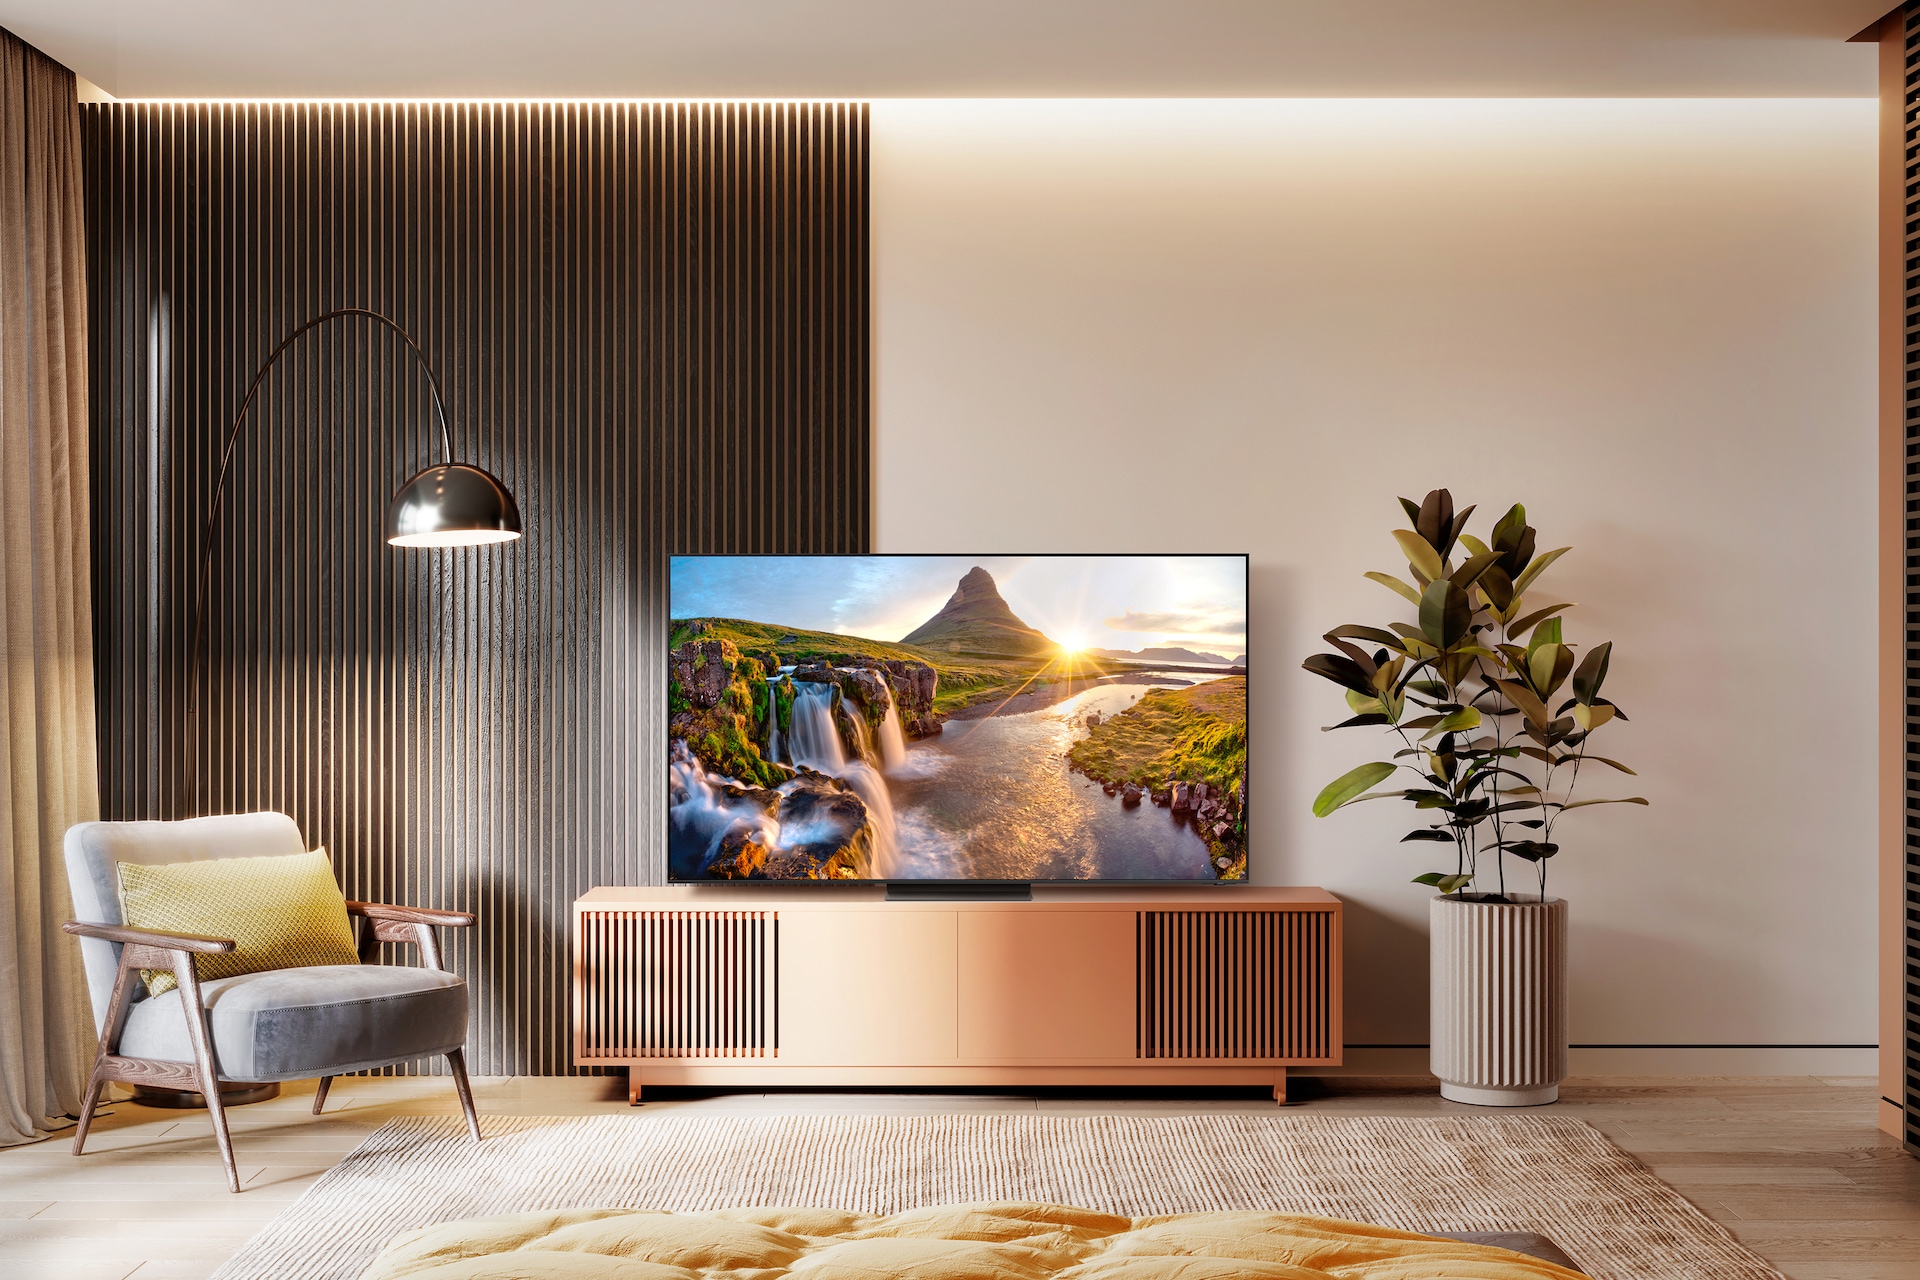 KQ75QC65AFXKR의 넓은 브라운 계열의 거실에 화초와 스탠드 전등이  놓여져 있고 가운데 서랍장 위에 폭포가 흐르는 TV화면의 라이프스타일컷